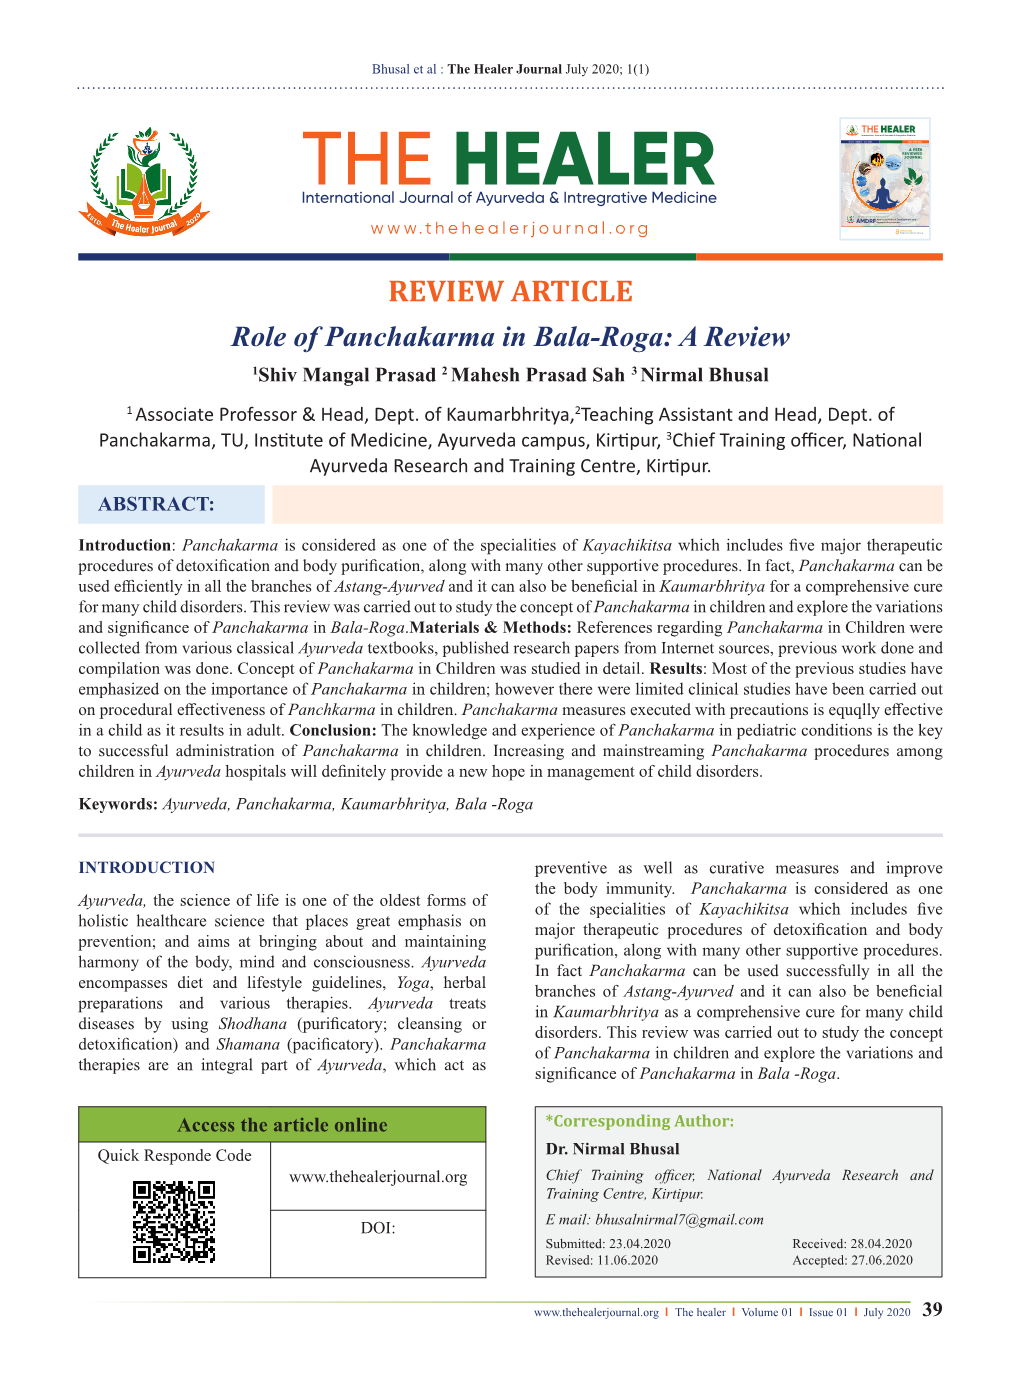 The Healer Journal July 2020; 1(1) the HEALER International Journal of Ayurveda & Intregrative Medicine